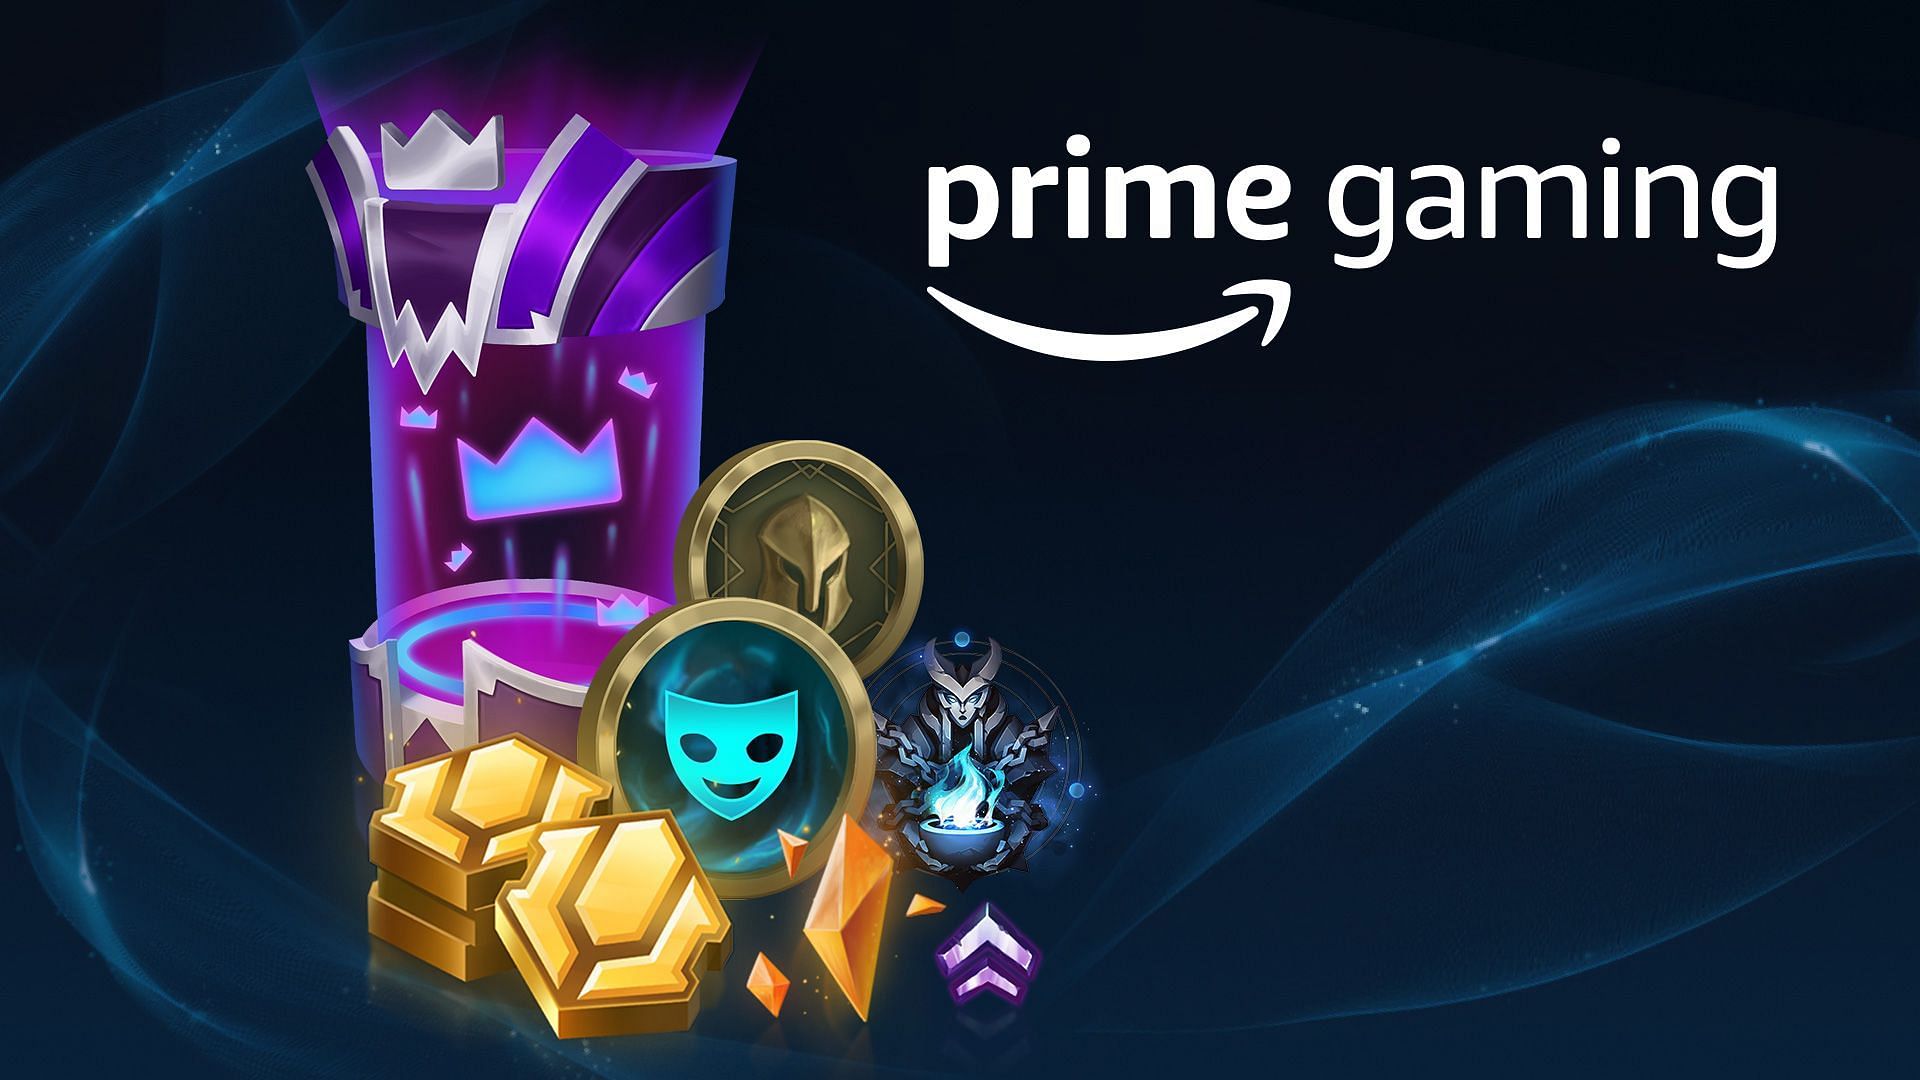 Roblox Prime Gaming Rewards (December 2023): Get Free…